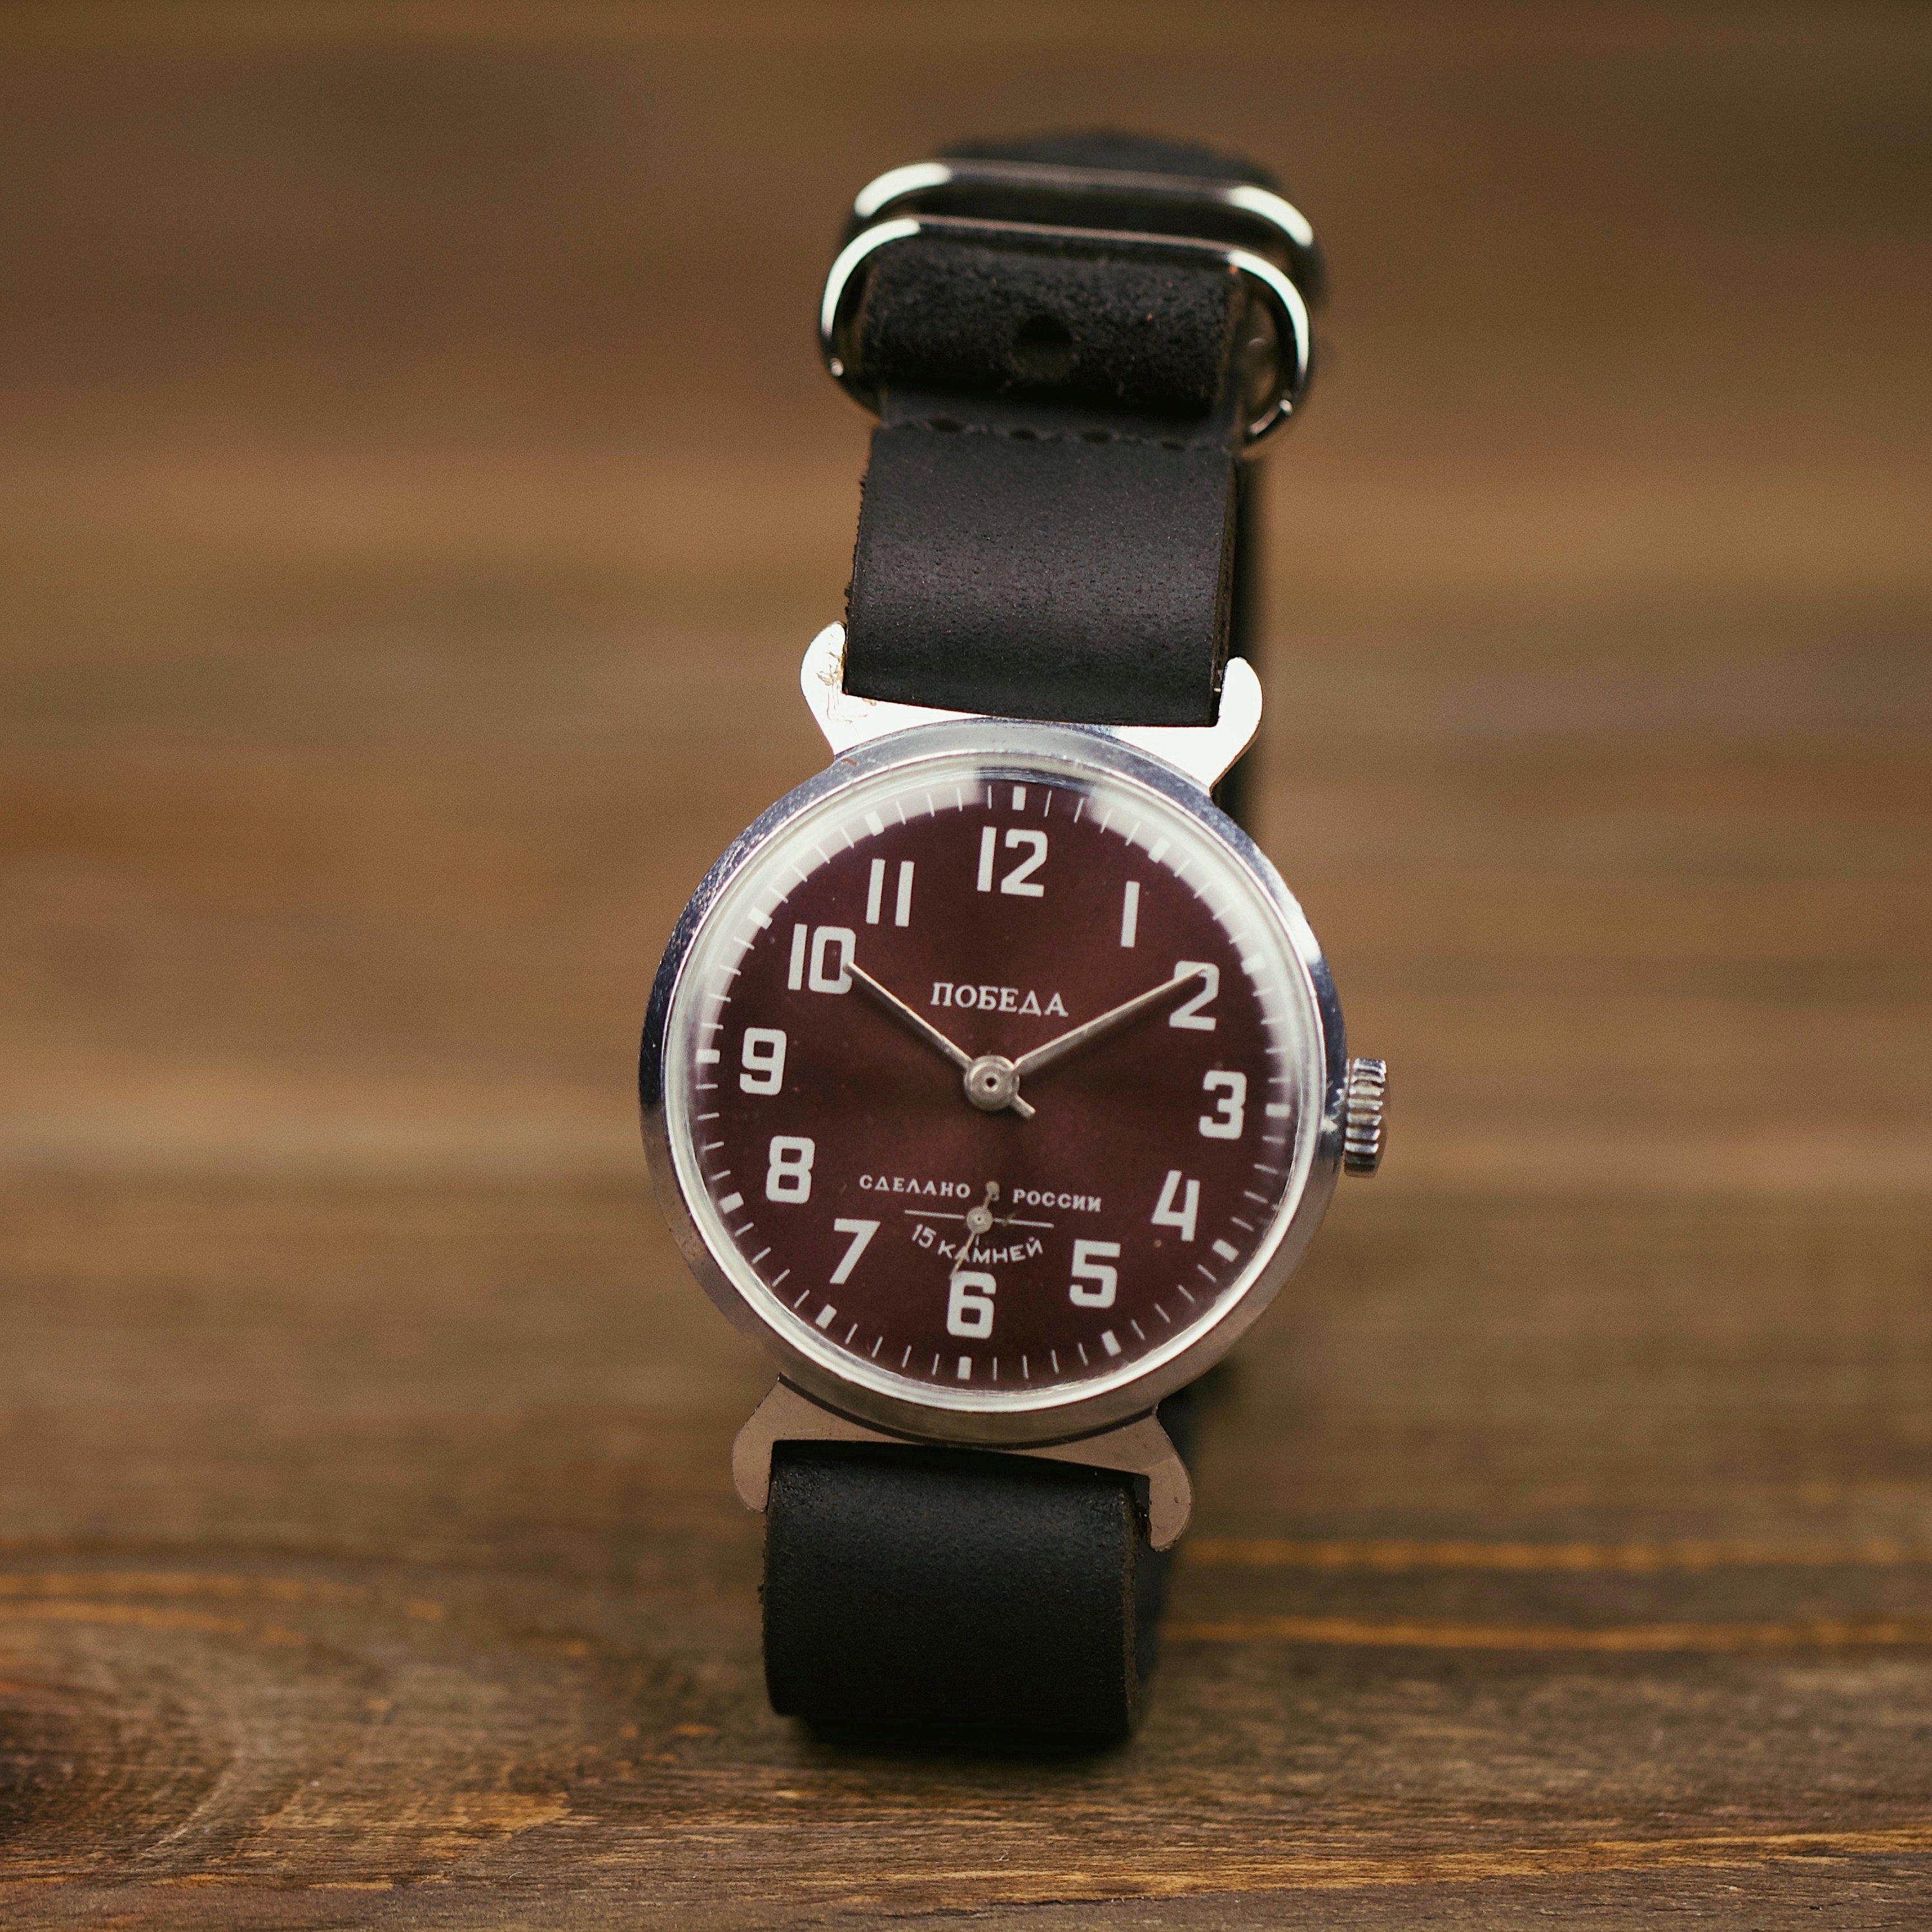 Rare men's soviet vintage wrist watch Pobeda with leather nato strap